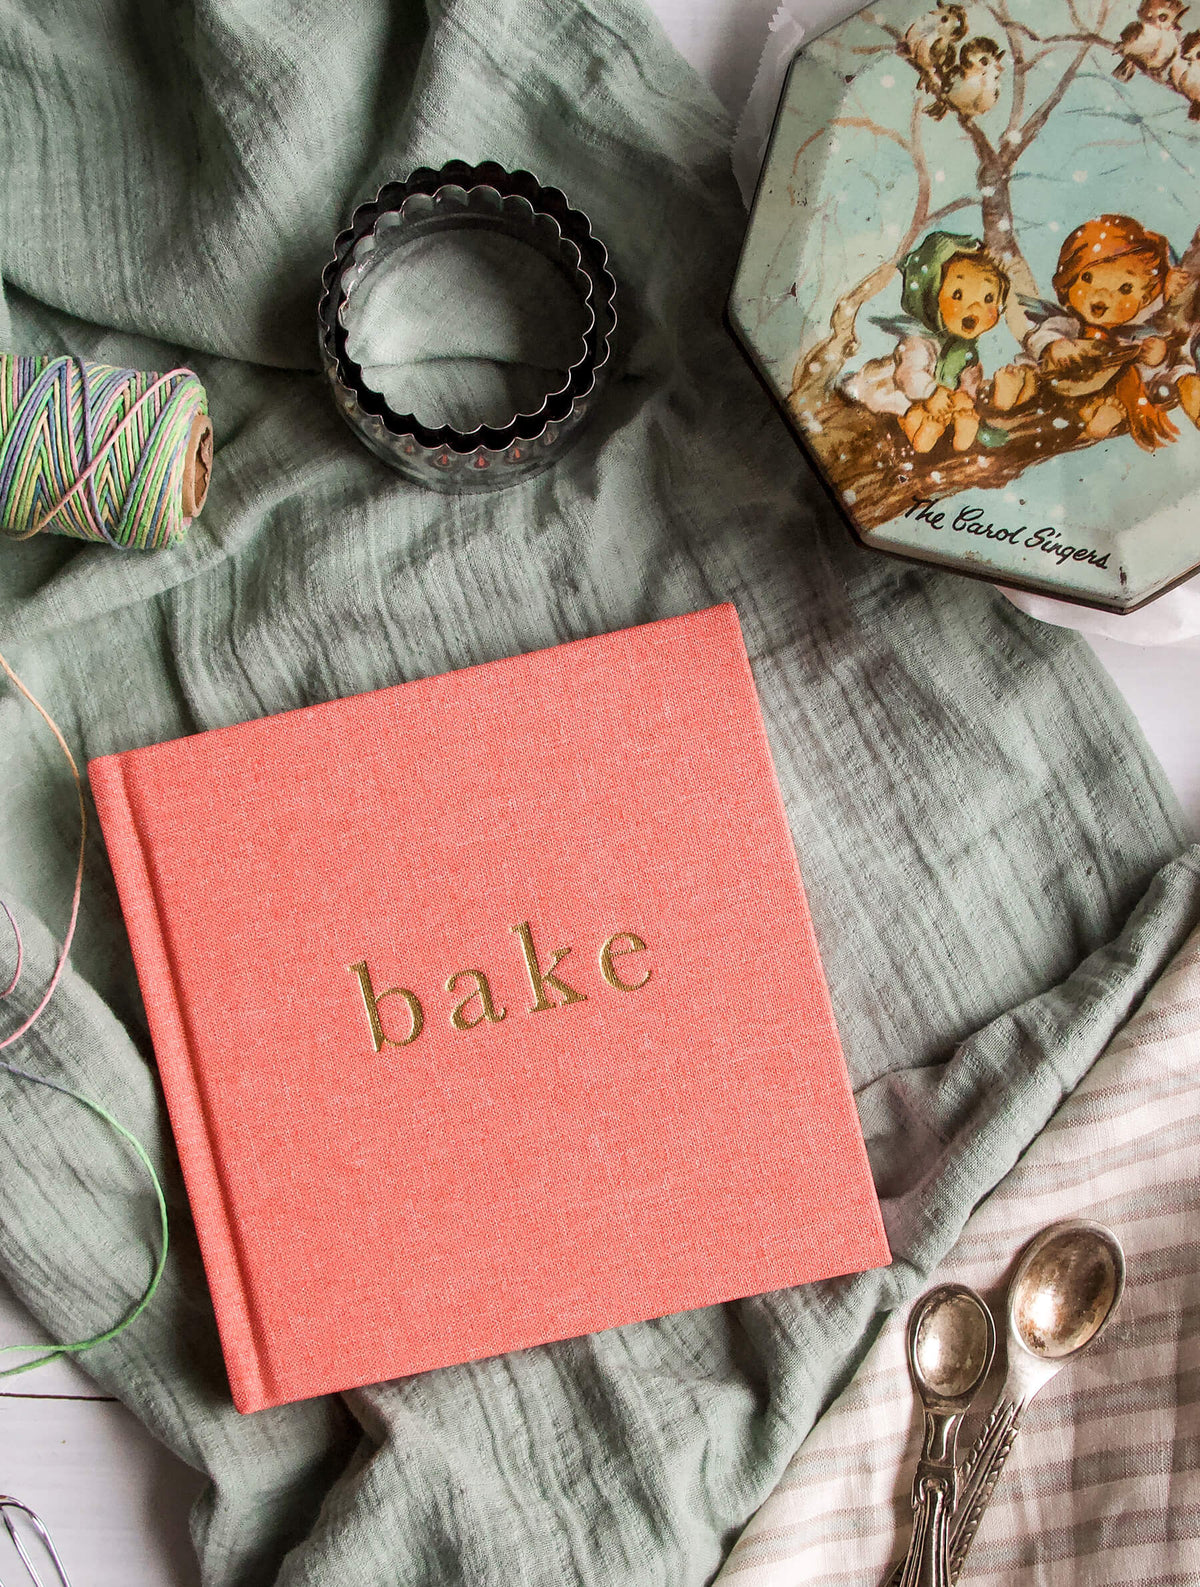 Bake. Recipes To Bake. Vintage Coral